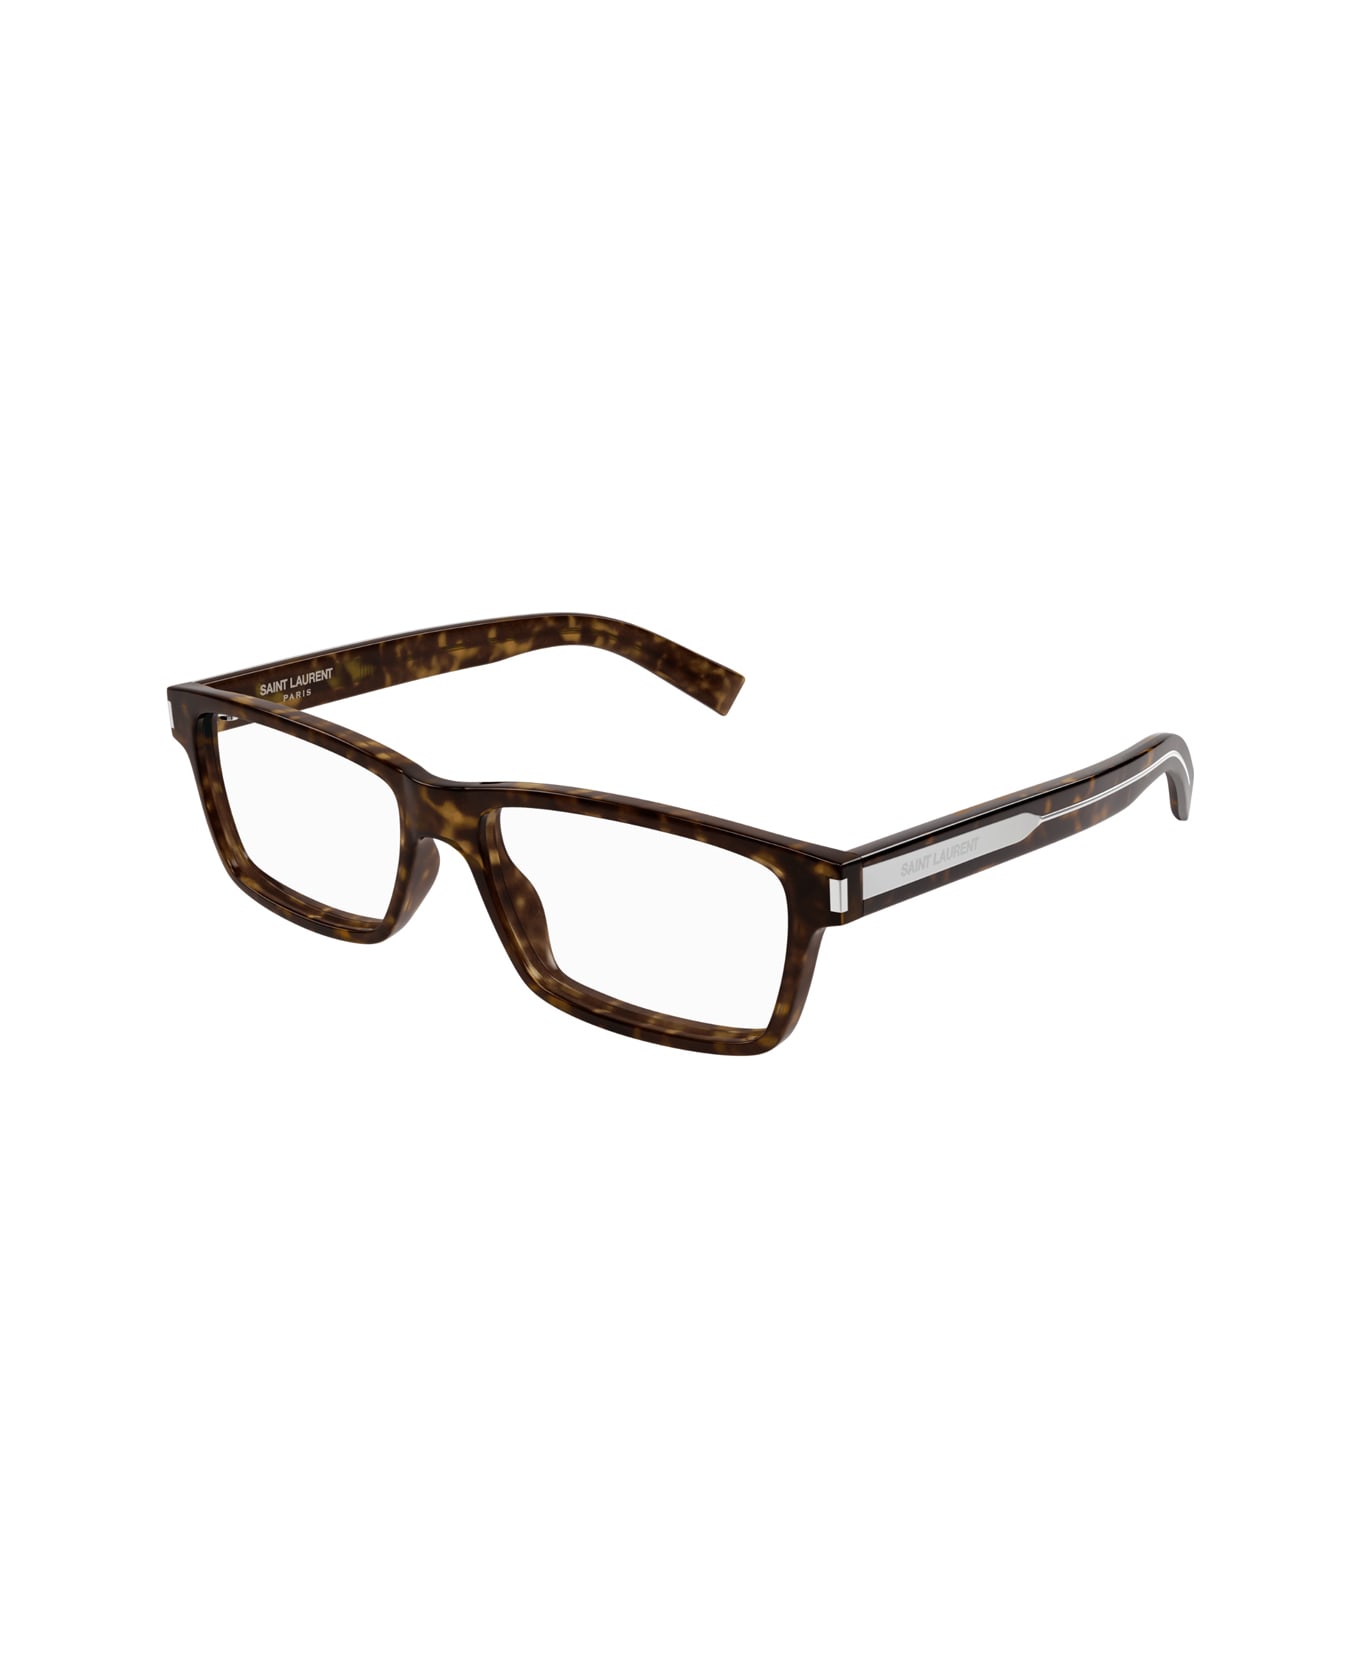 Saint Laurent Eyewear Sl 622 002 Glasses - Marrone